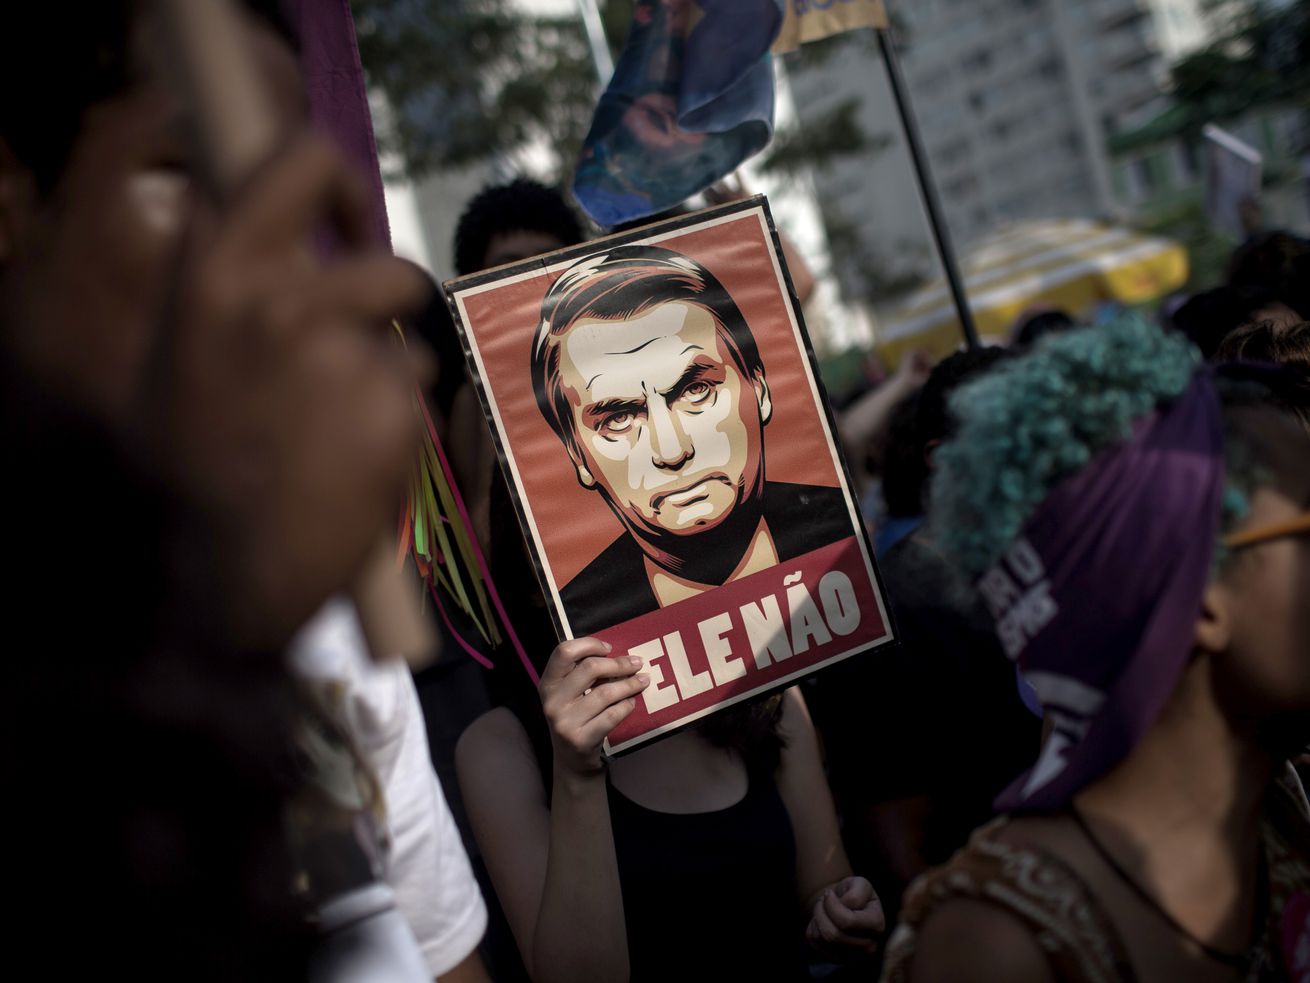 Brazilian president jair bolsonaro gets pissed